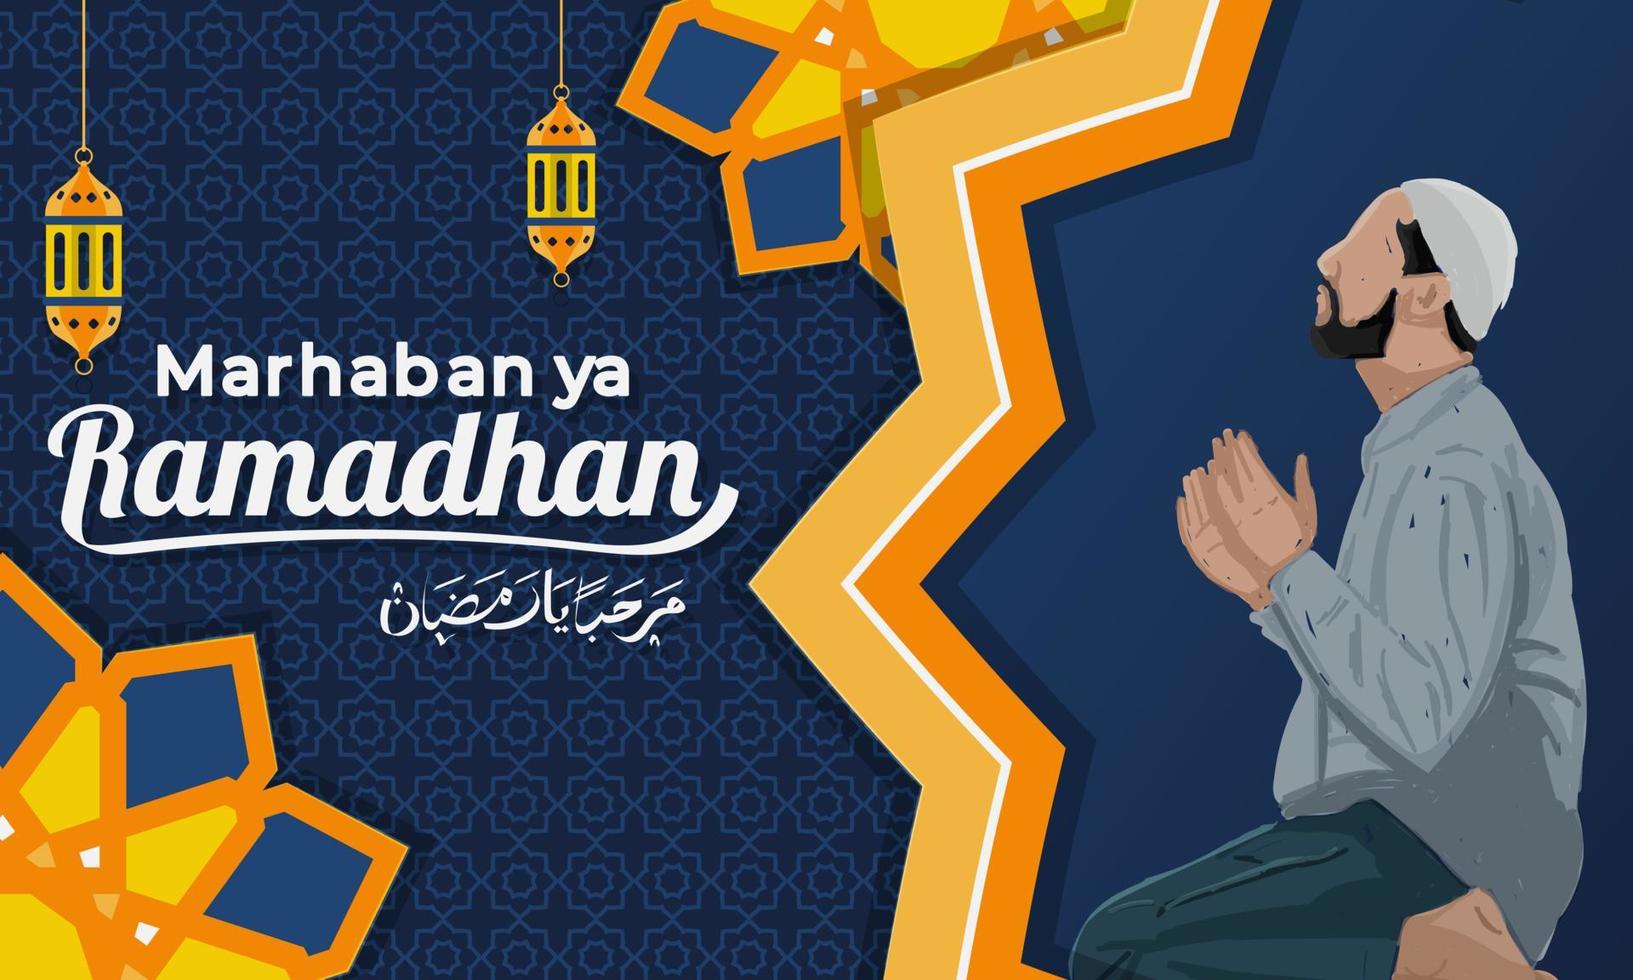 islamico sfondo saluto marhaban ya Ramadhan quale si intende benvenuto Ramadhan vettore